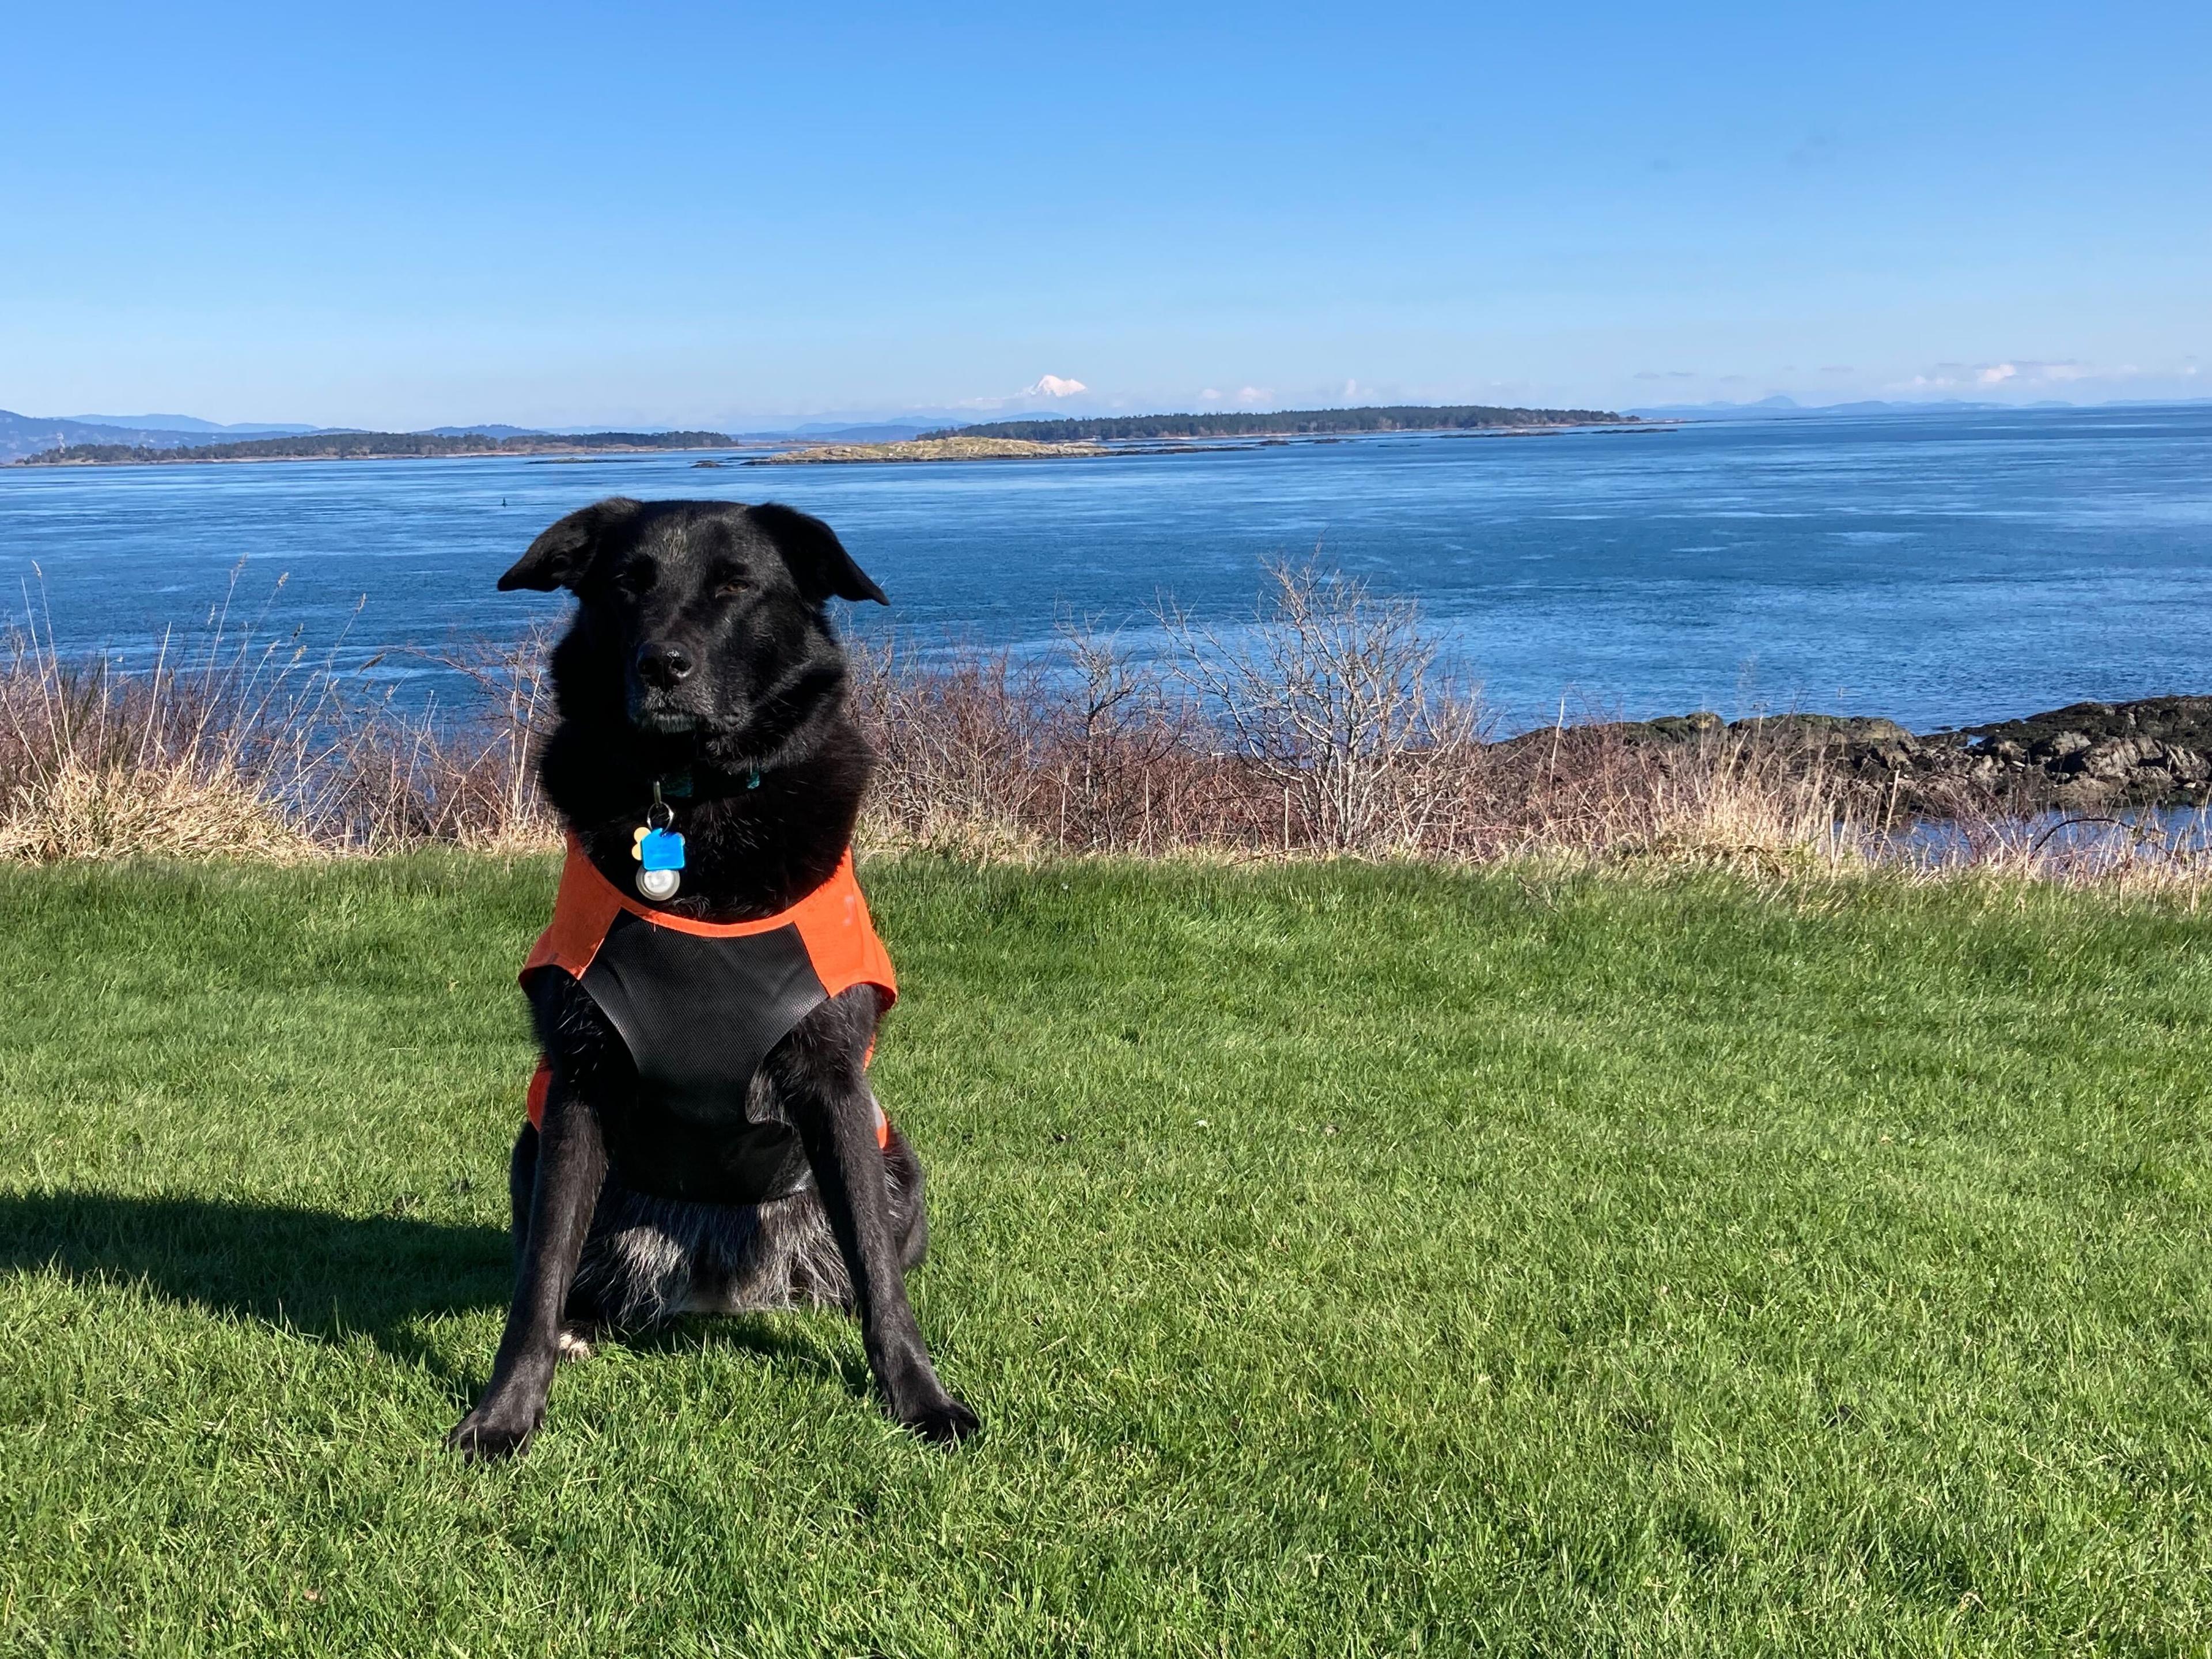 Black dog with a high vis vest stands on a grassy plain